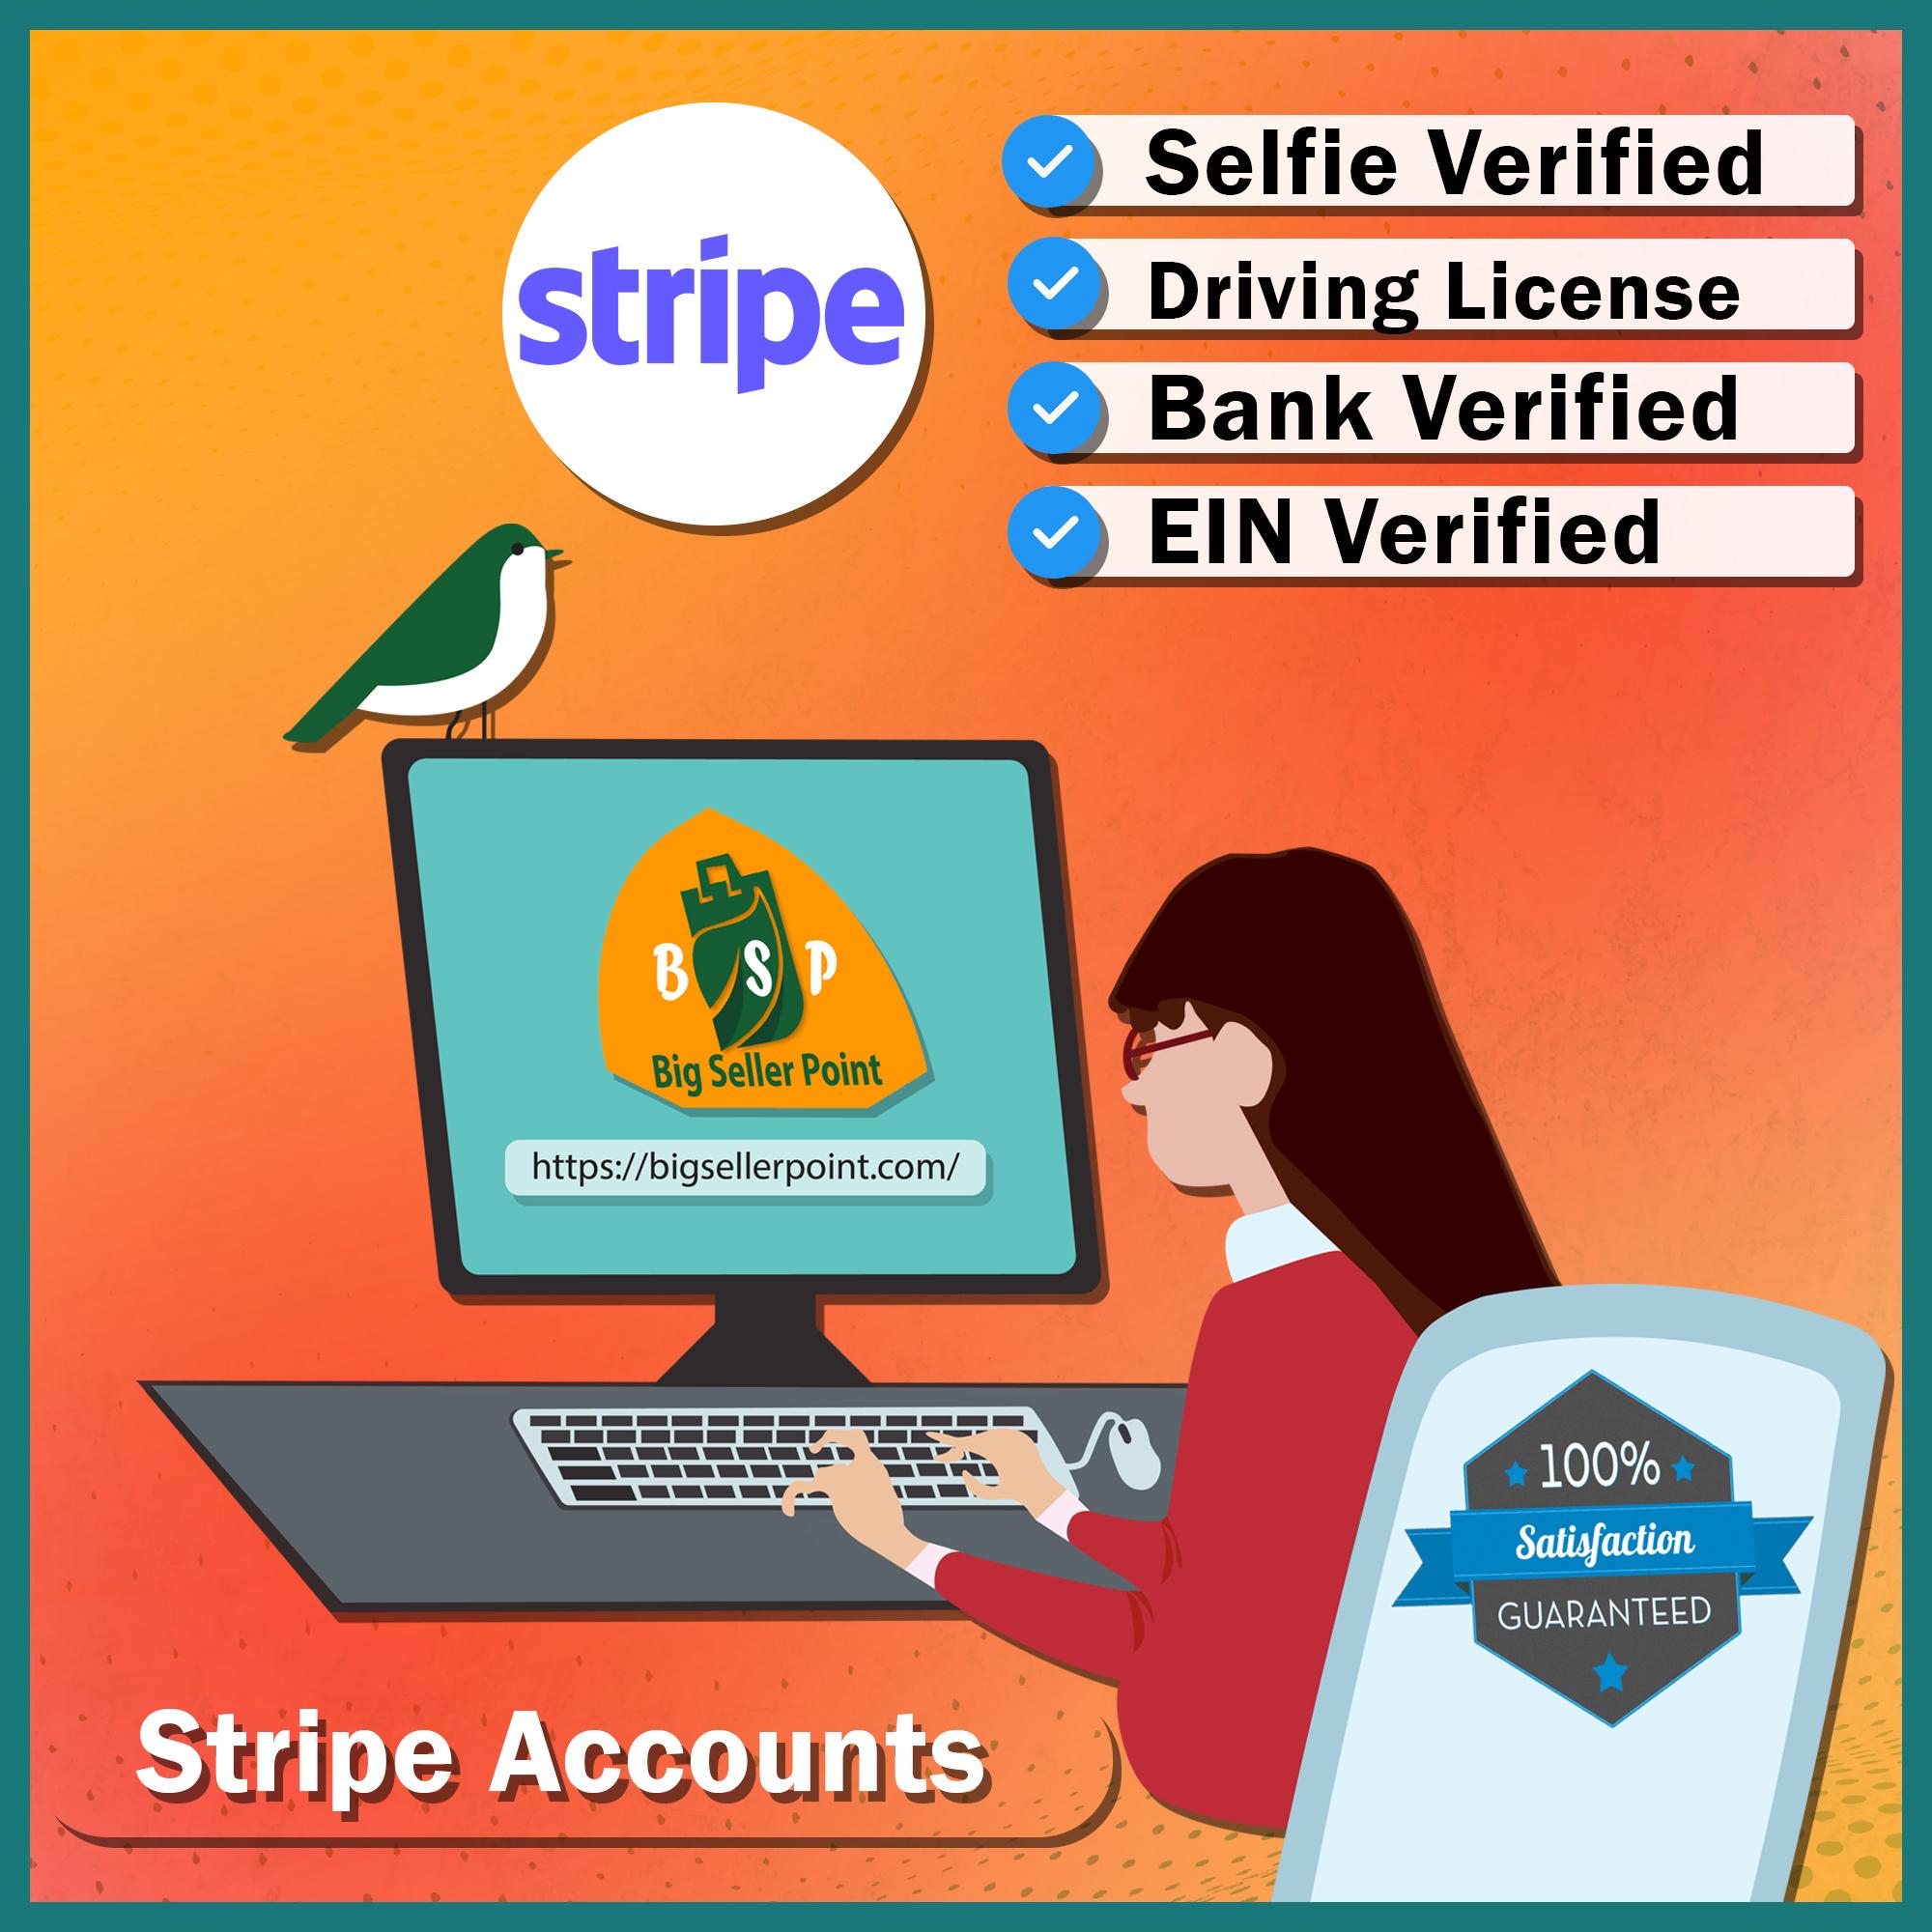 Buy verified stripe account - Bigsellerpoint